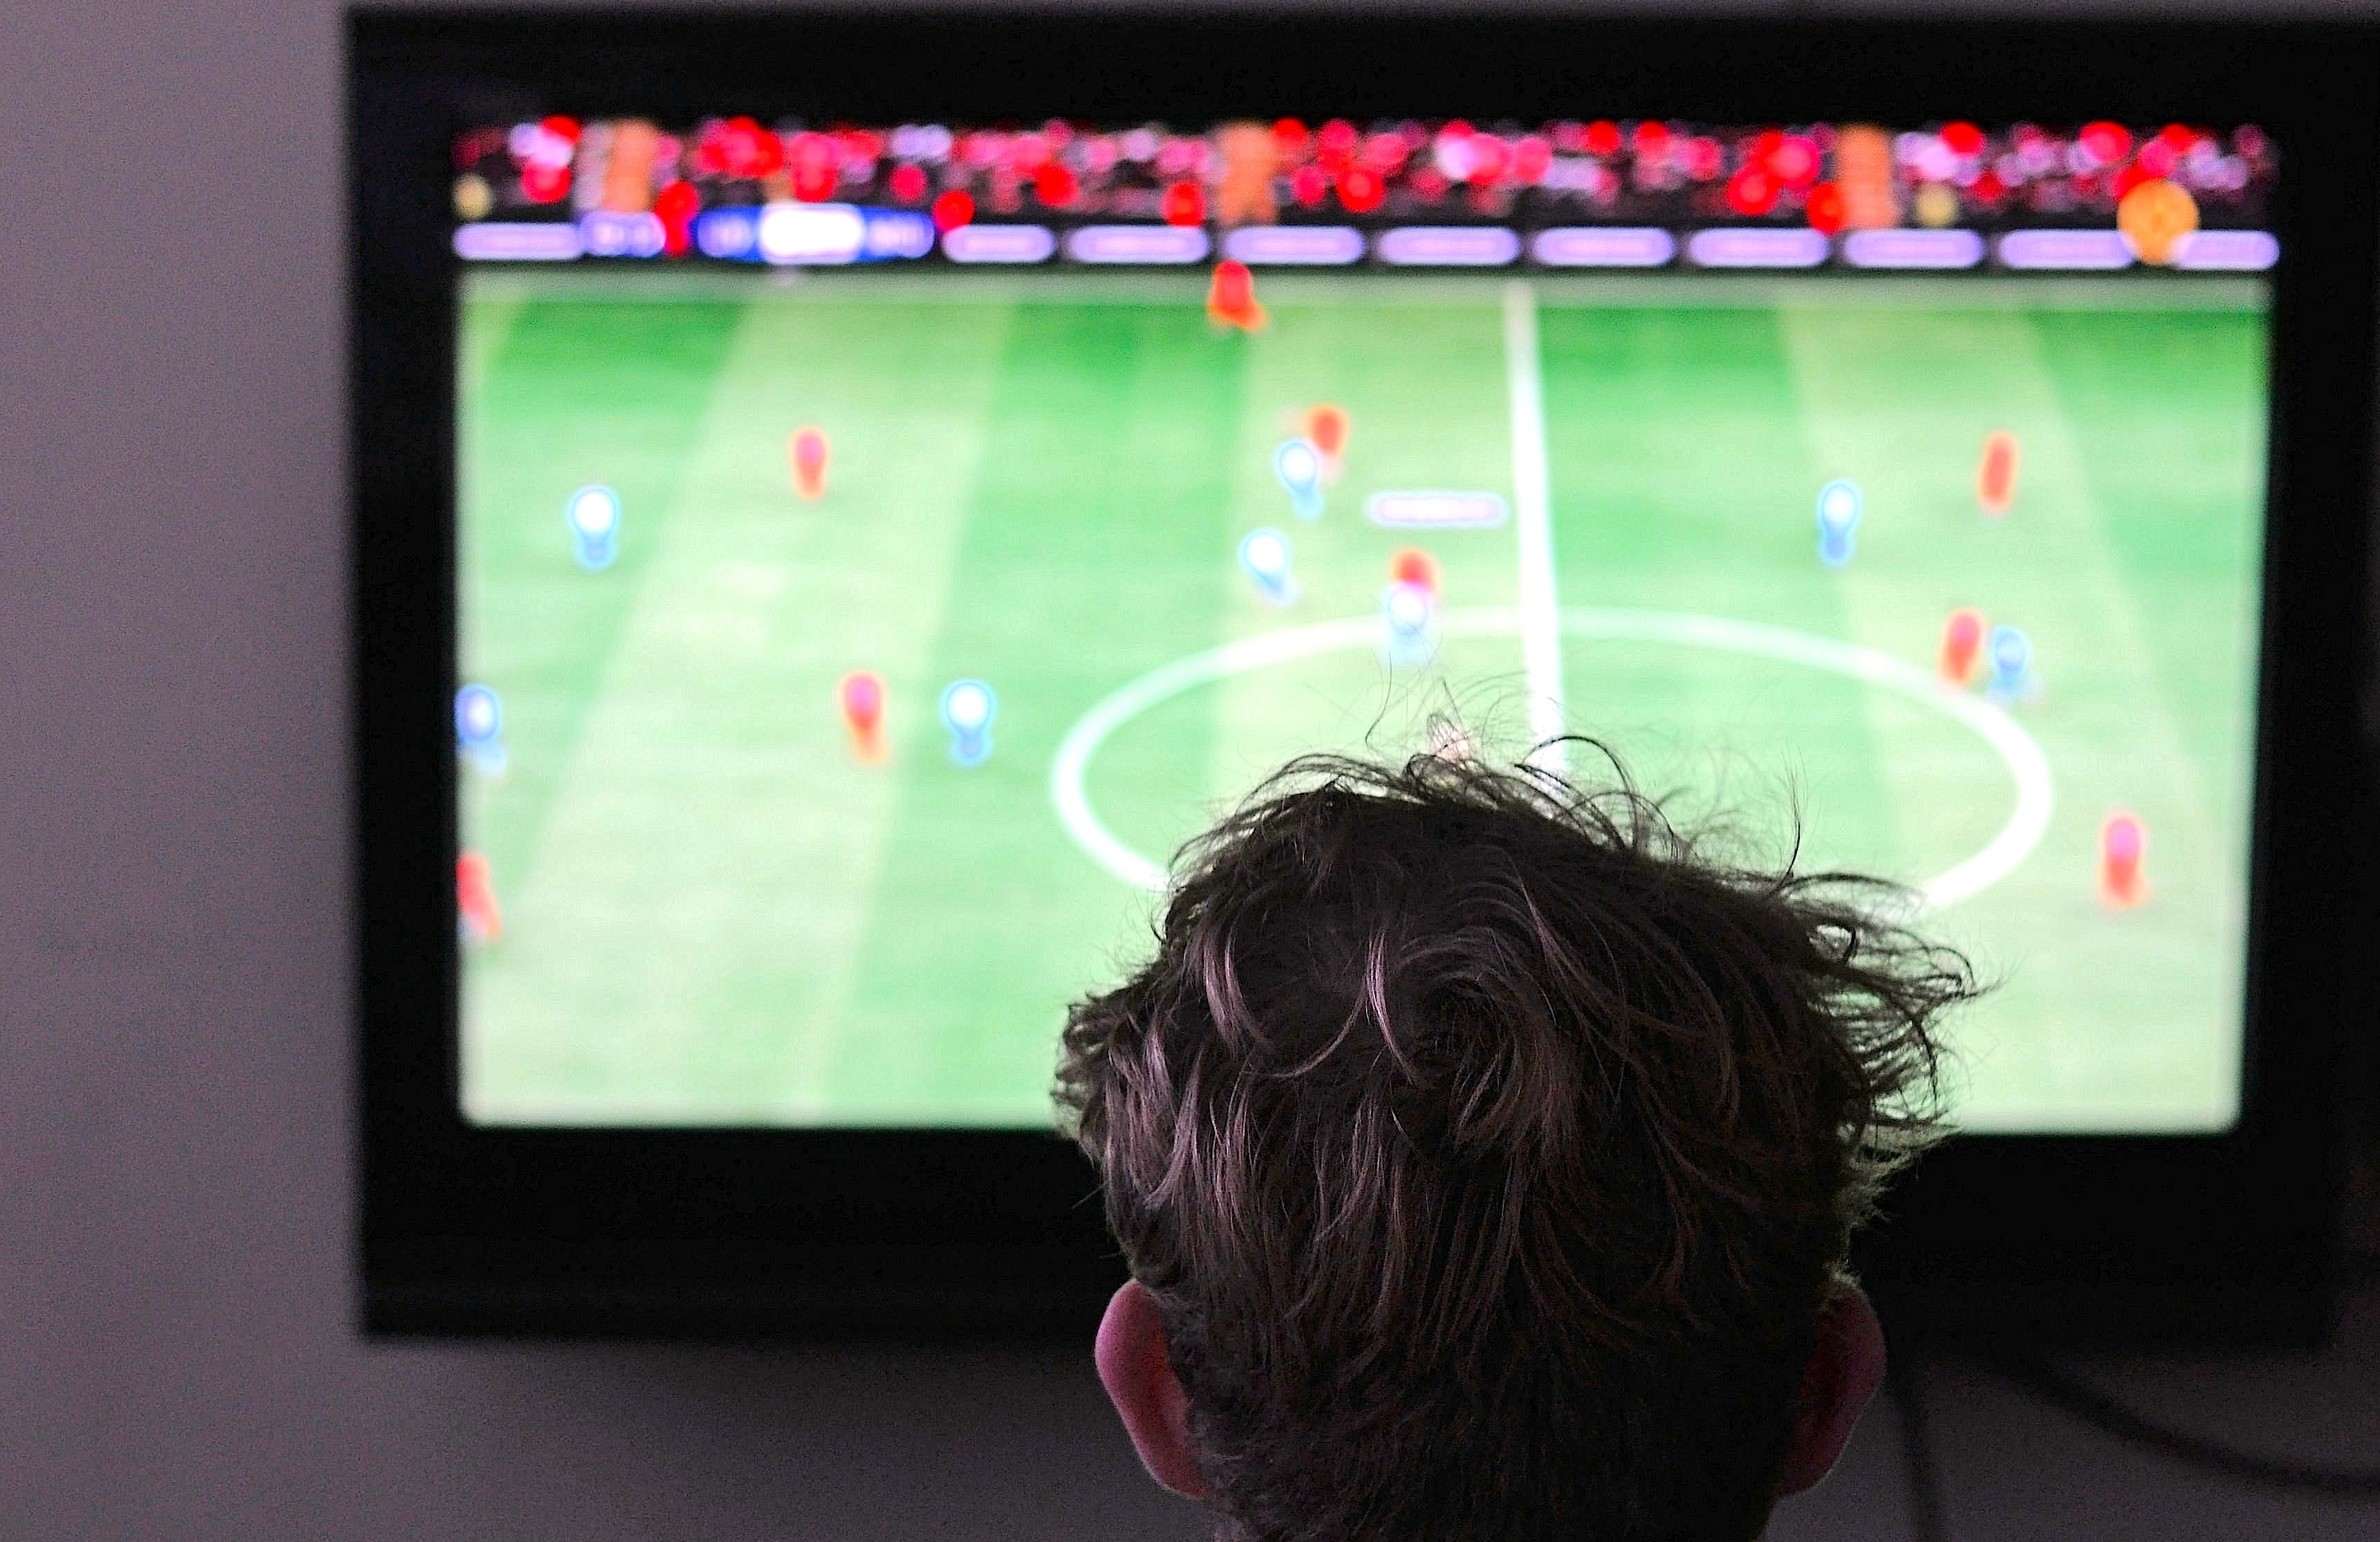 Будет футбол телевизору. Телевизор футбол. Футбол на экране телевизора. Футбол по телевизору. Футбол на телевизоре игра.